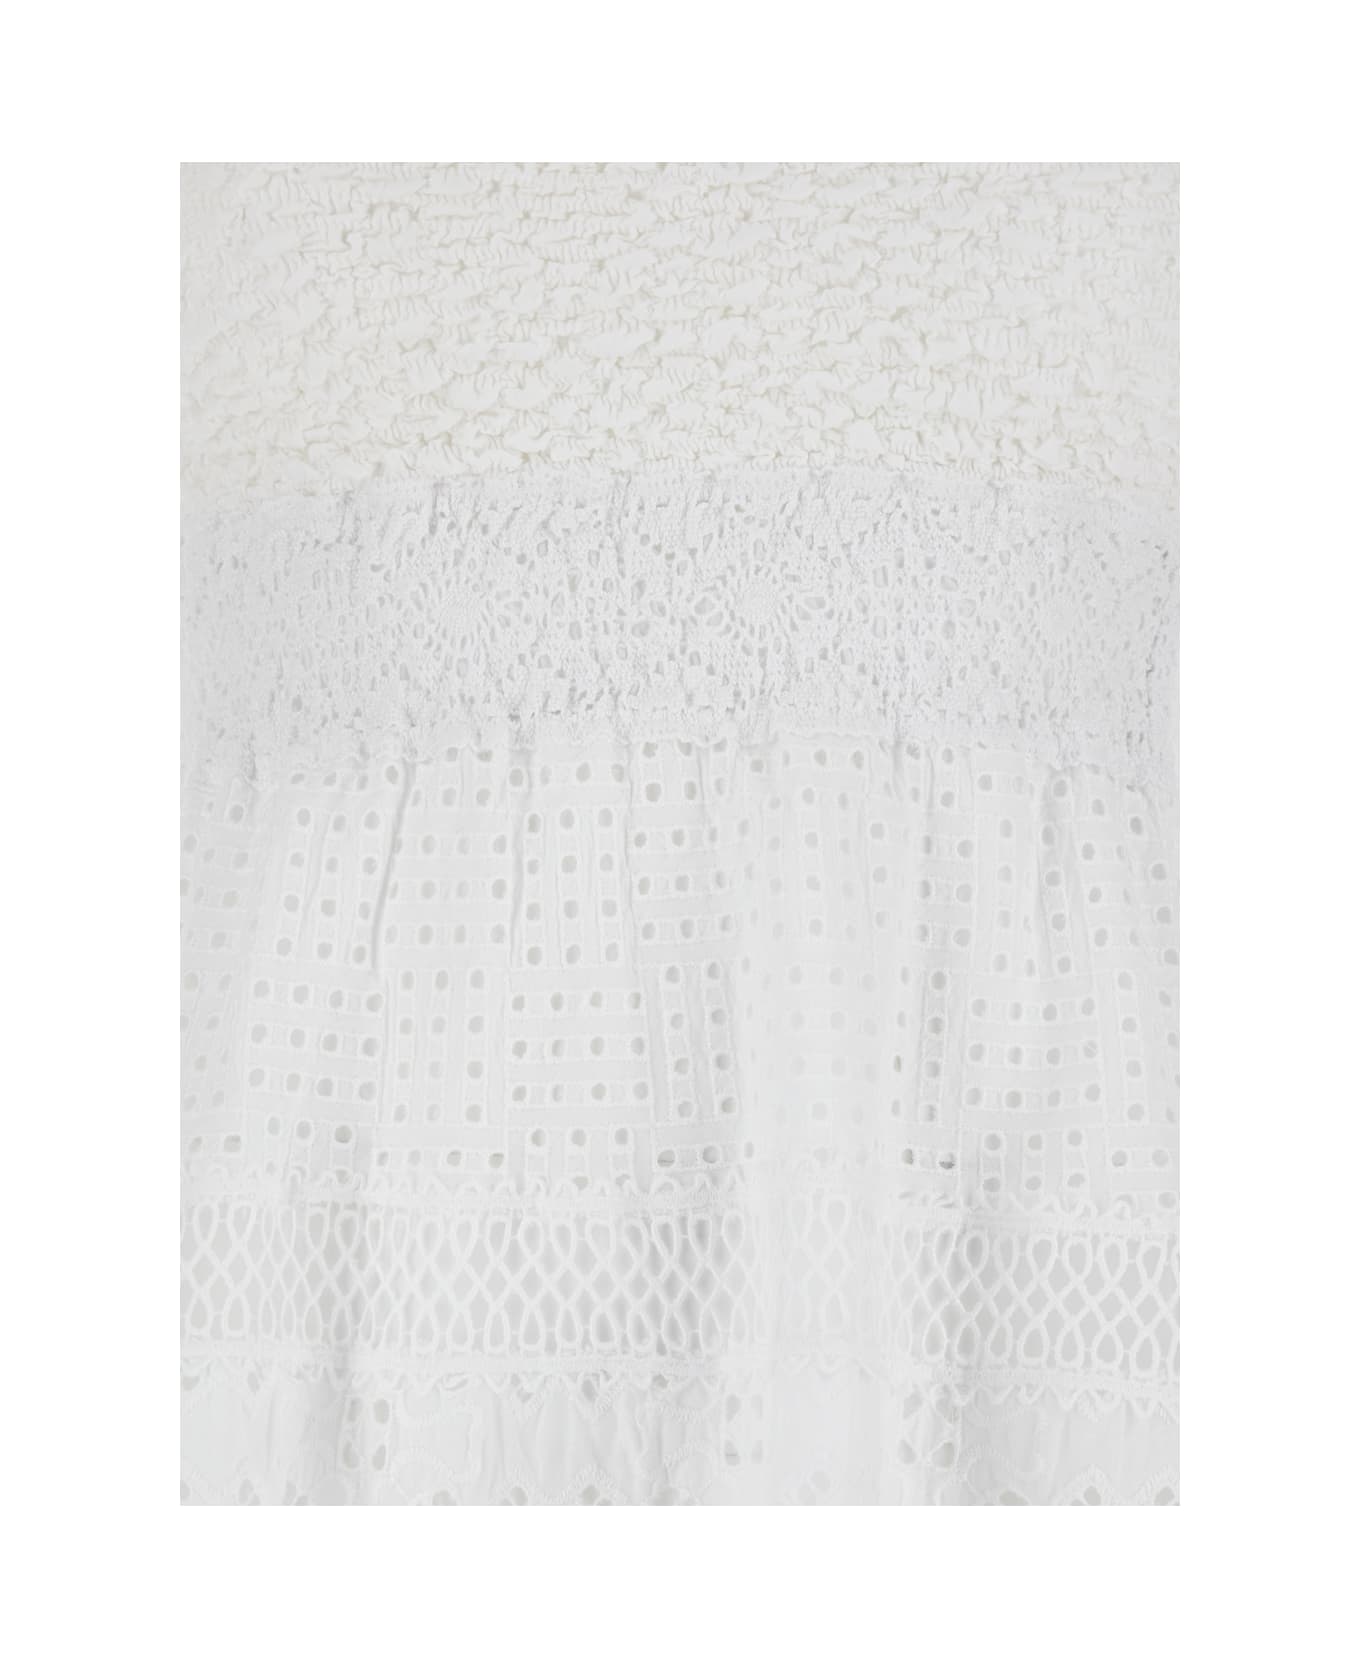 Temptation Positano White Long Embroidered Dress In Cotton Woman - White ワンピース＆ドレス